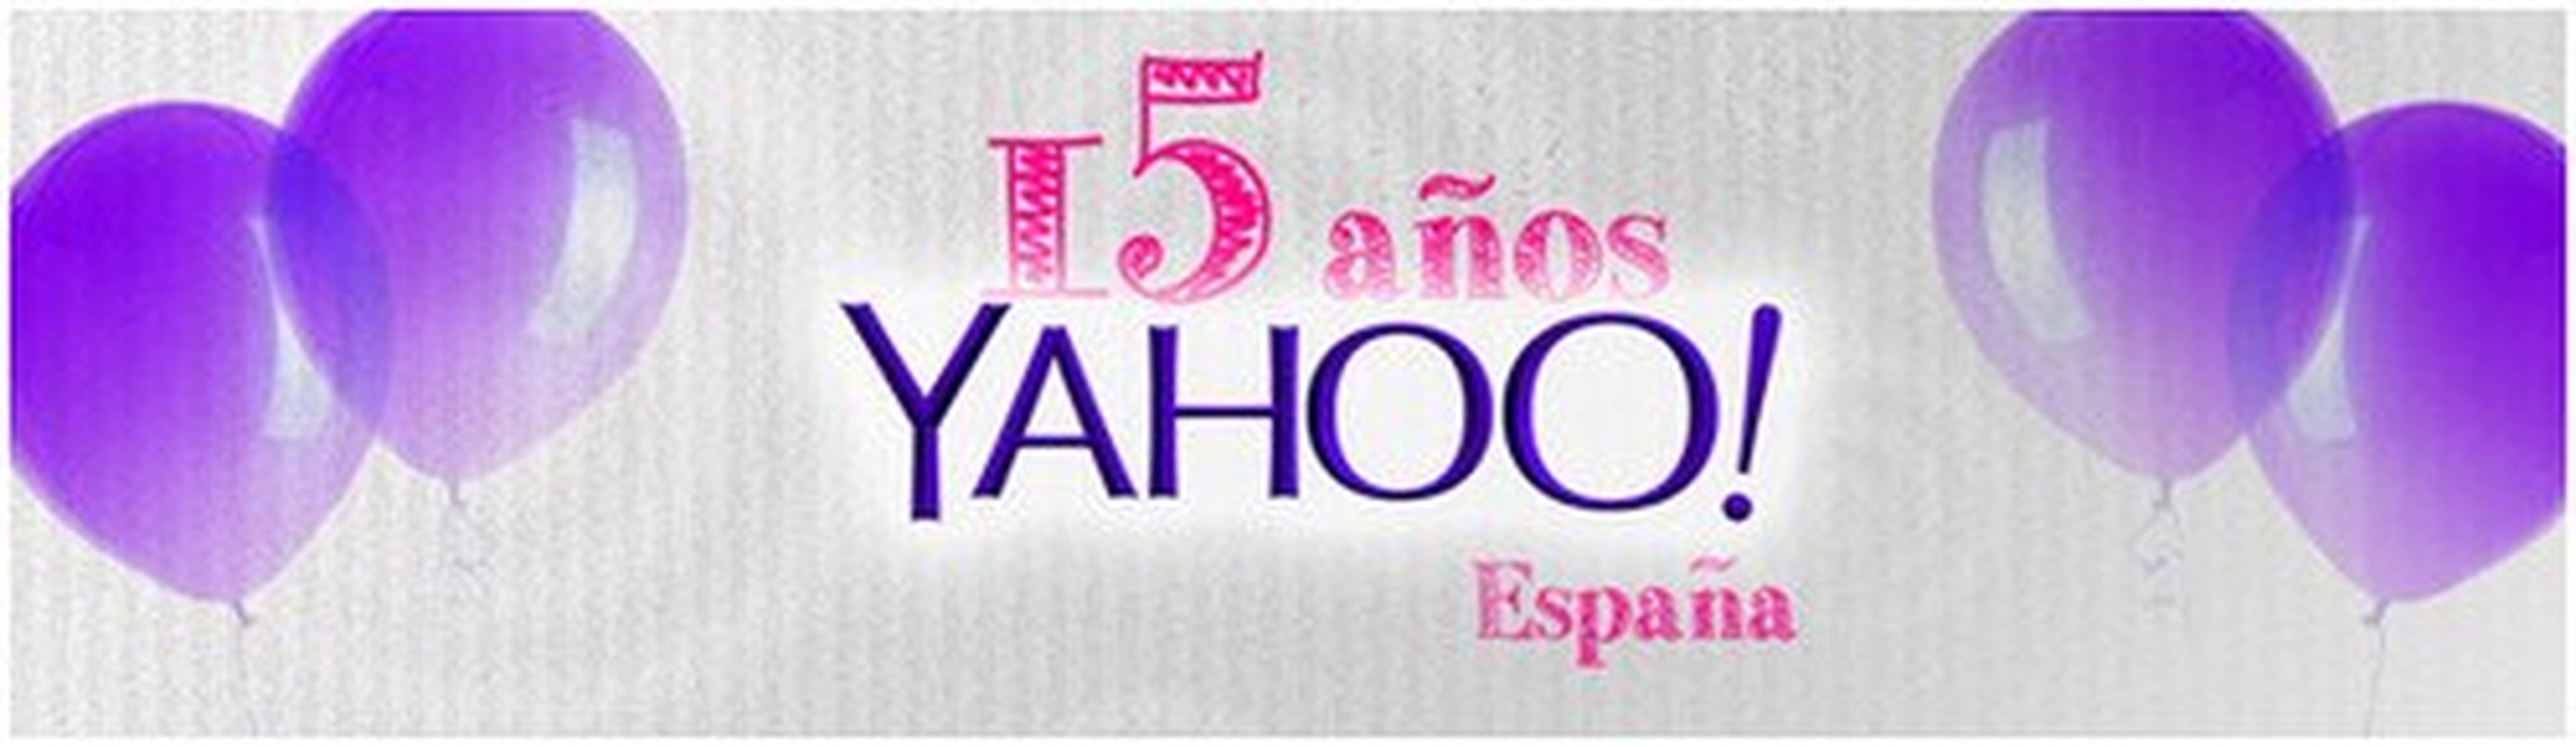 Yahoo! España celebra su 15 aniversario